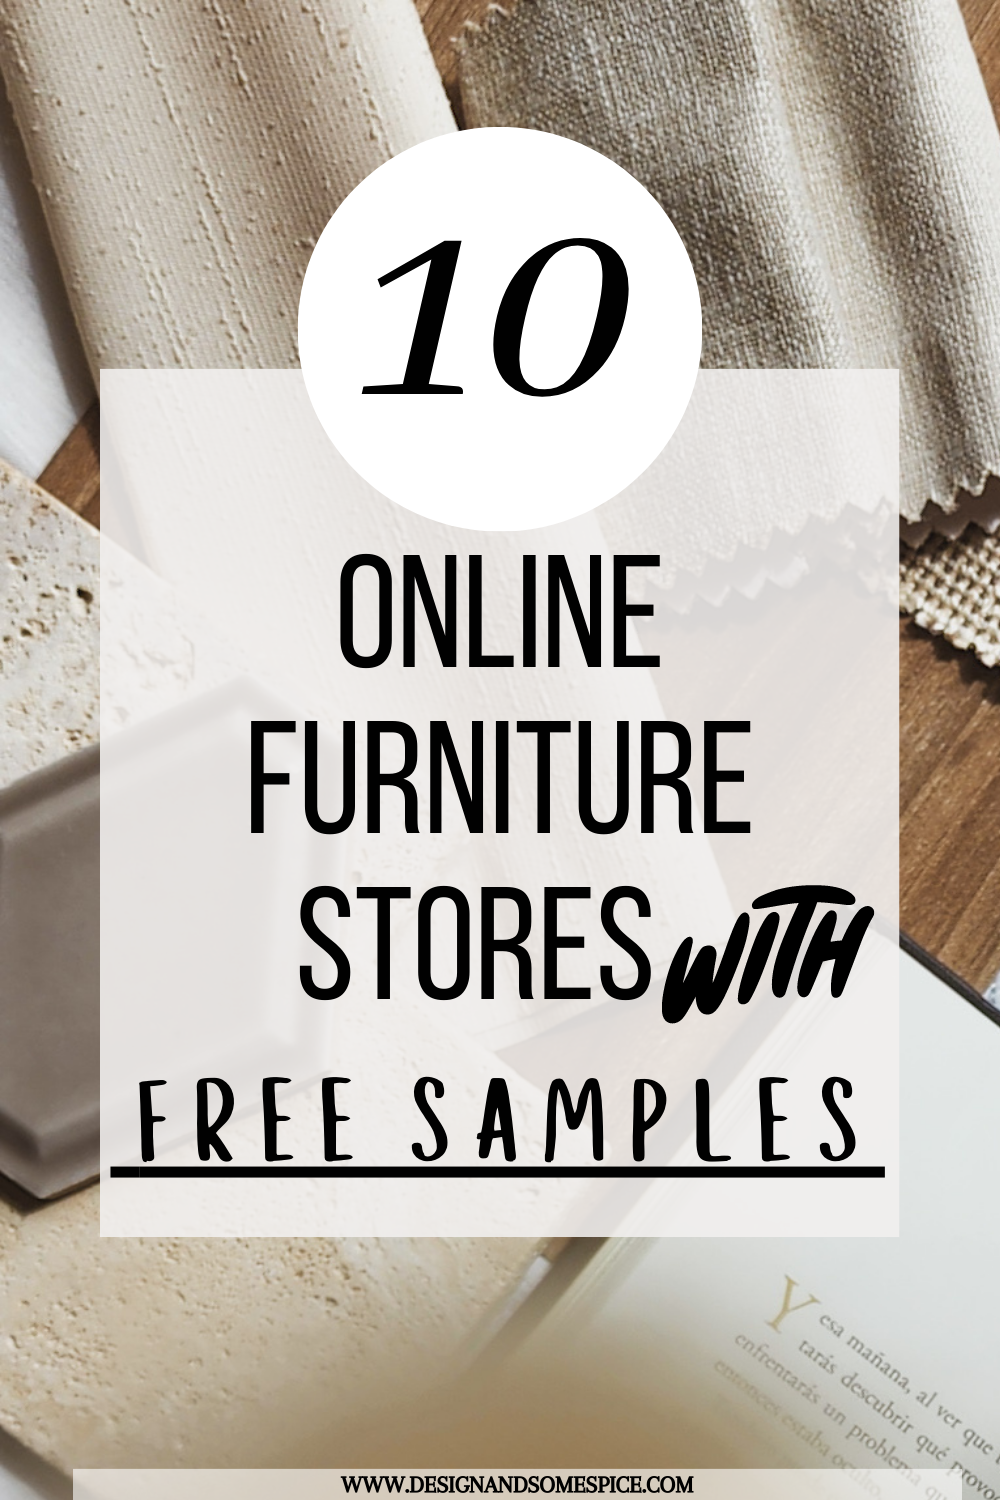 Order free furniture samples